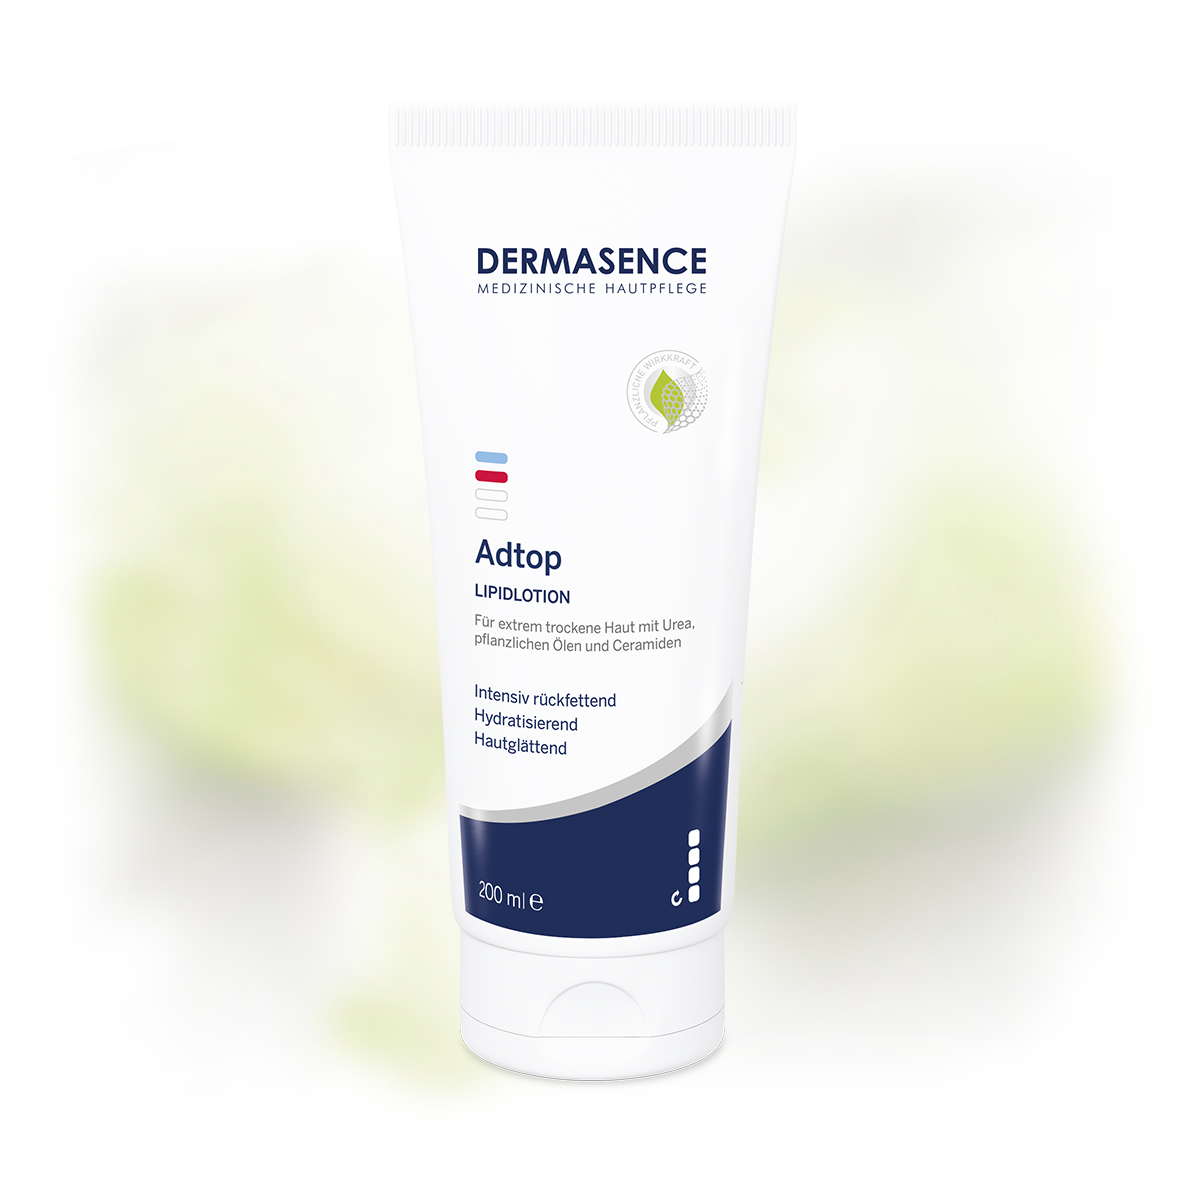 DERMASENCE Adtop Lipid lotion, 200 ml